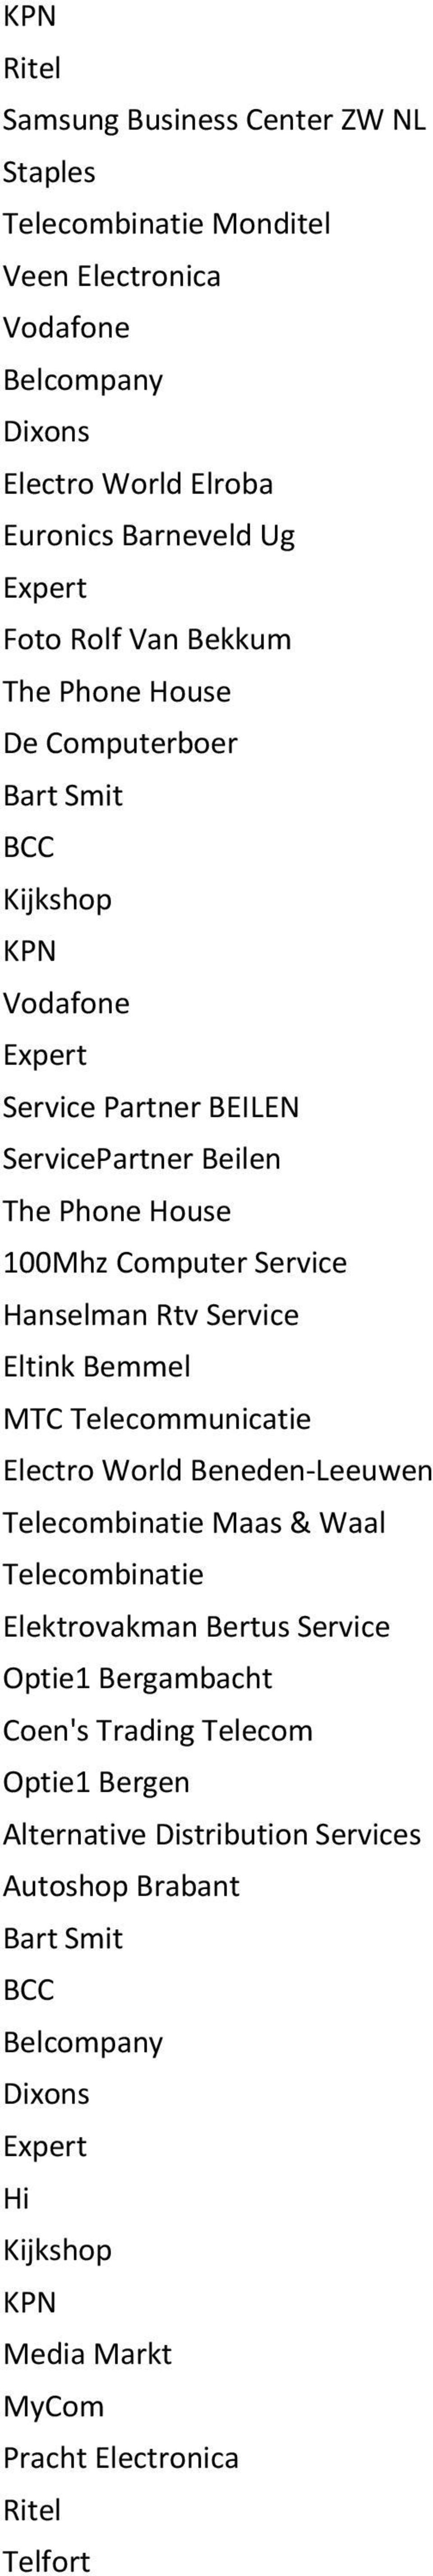 Telecommunicatie Electro World Beneden-Leeuwen Telecombinatie Maas & Waal Telecombinatie Elektrovakman Bertus Service Optie1 Bergambacht